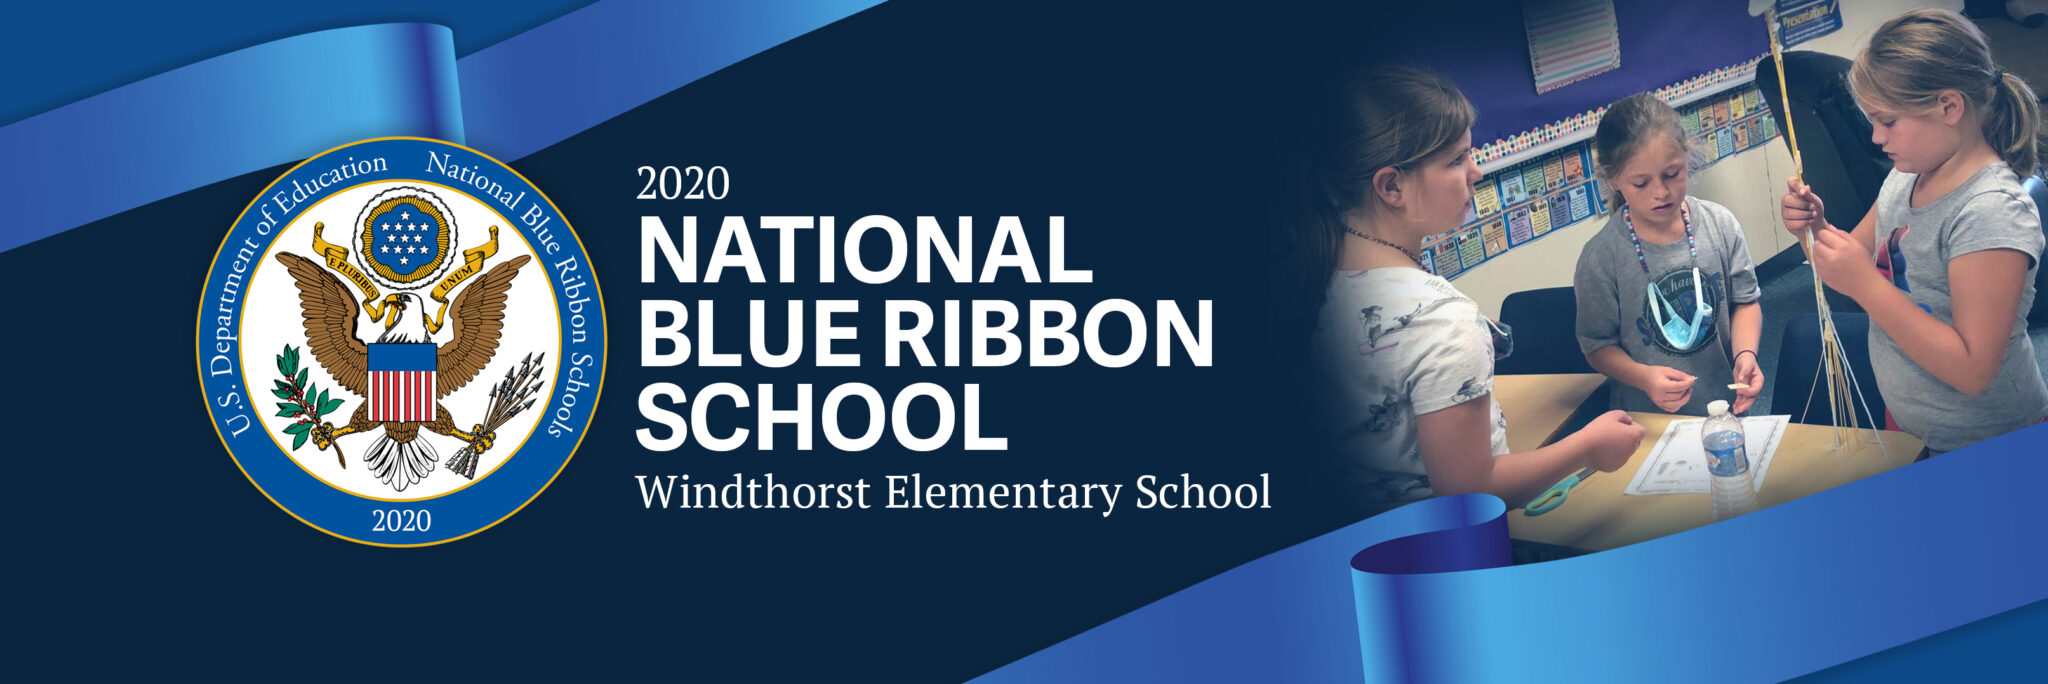 2020 National Blue Ribbon School | Wndthorst Elementary School!